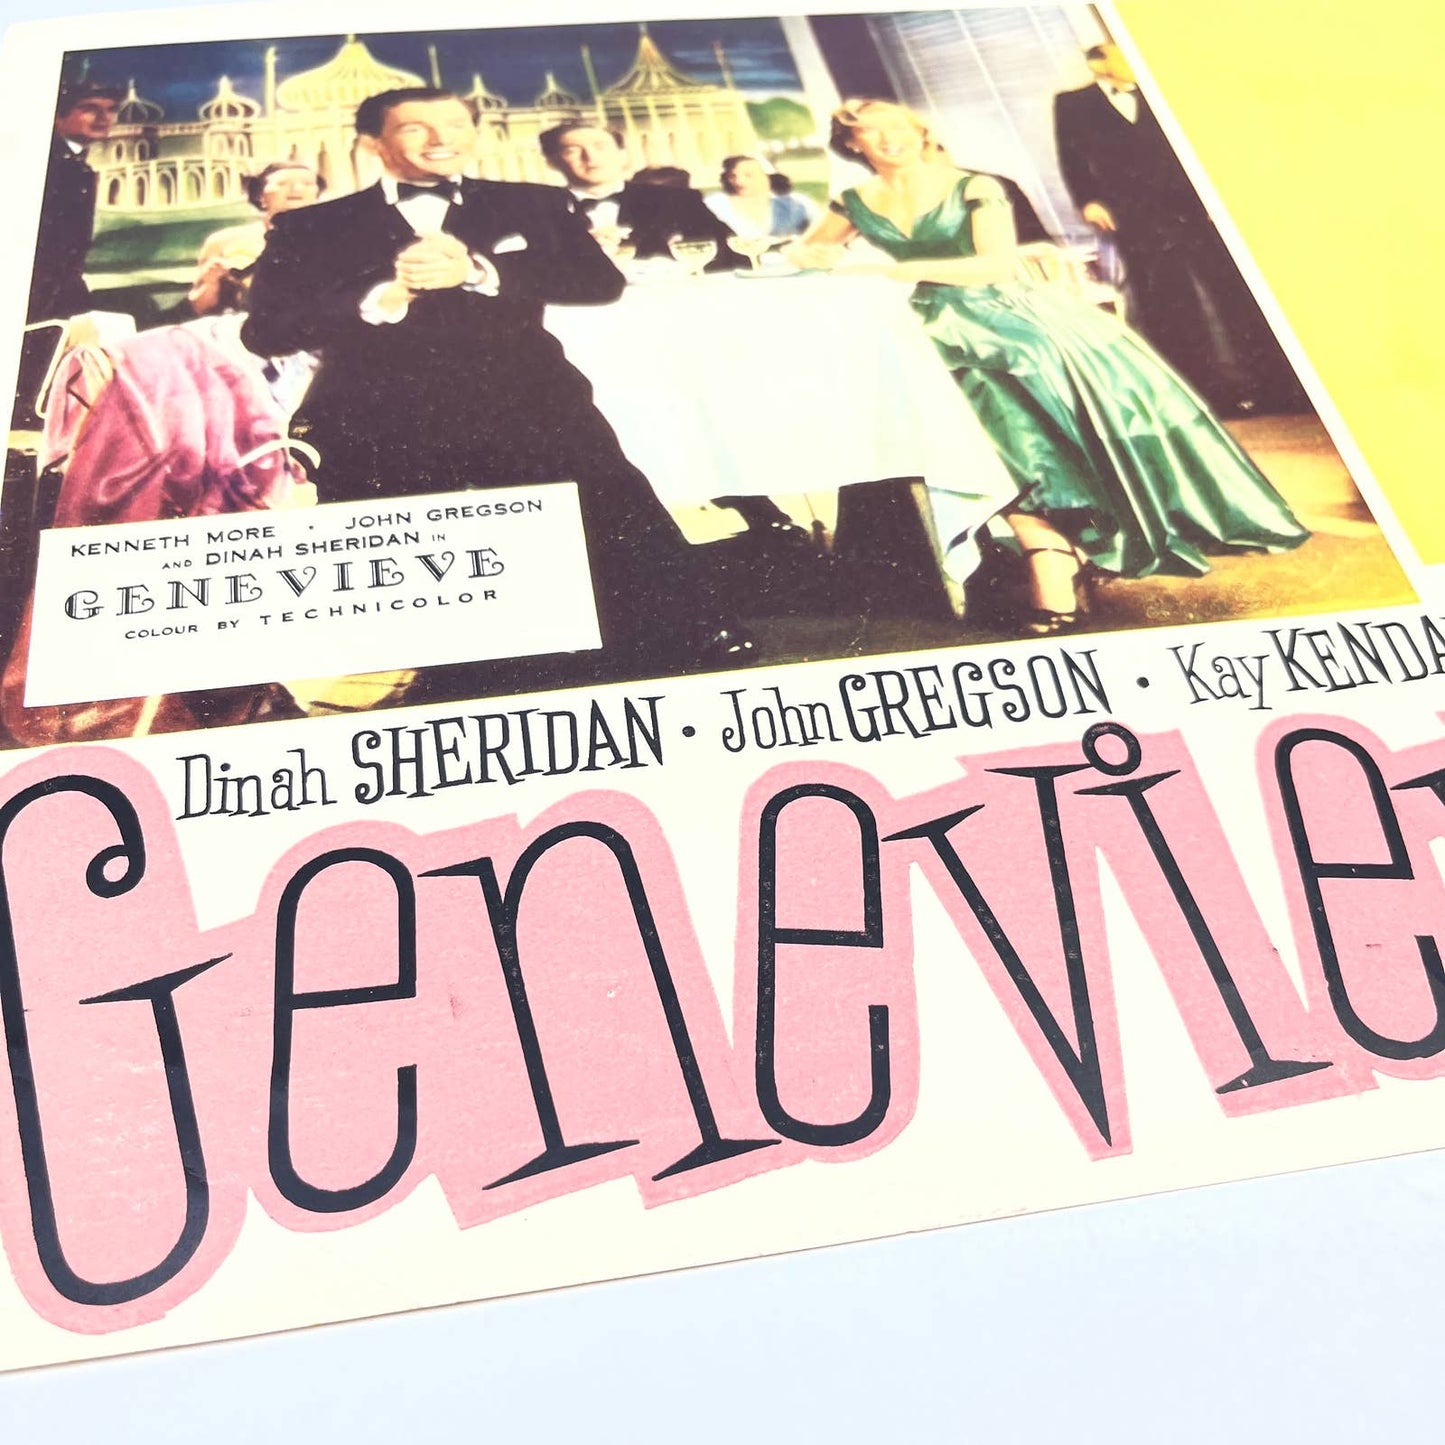 1953 Genevieve Kenneth More John Gregson Dinah Sheridan British Lobby Card FL4